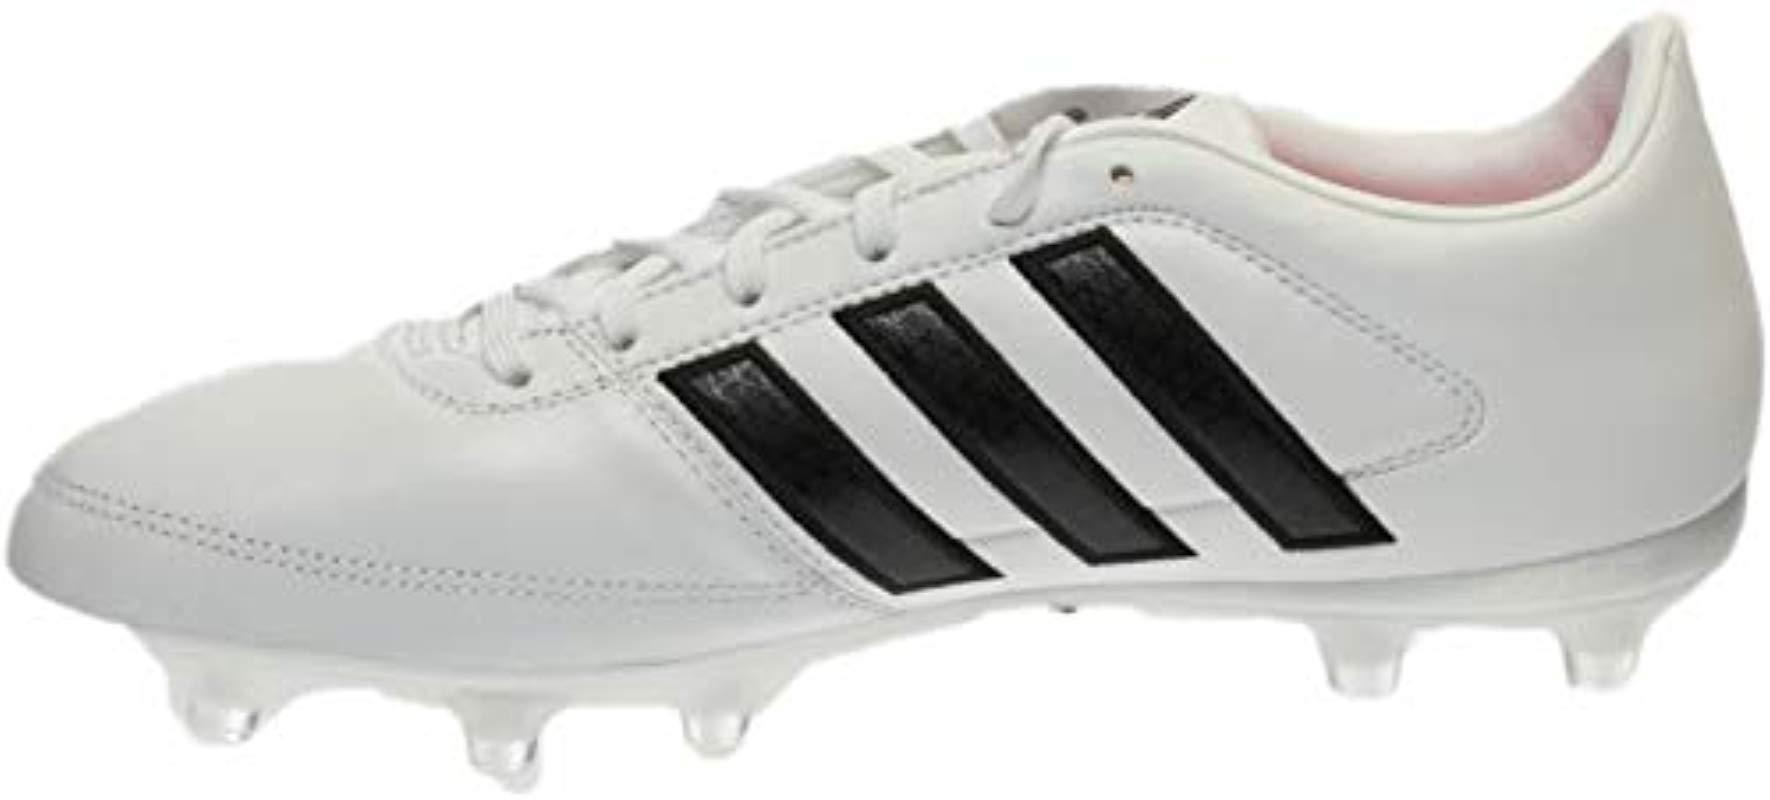 adidas performance men's gloro 16.1 fg soccer shoe